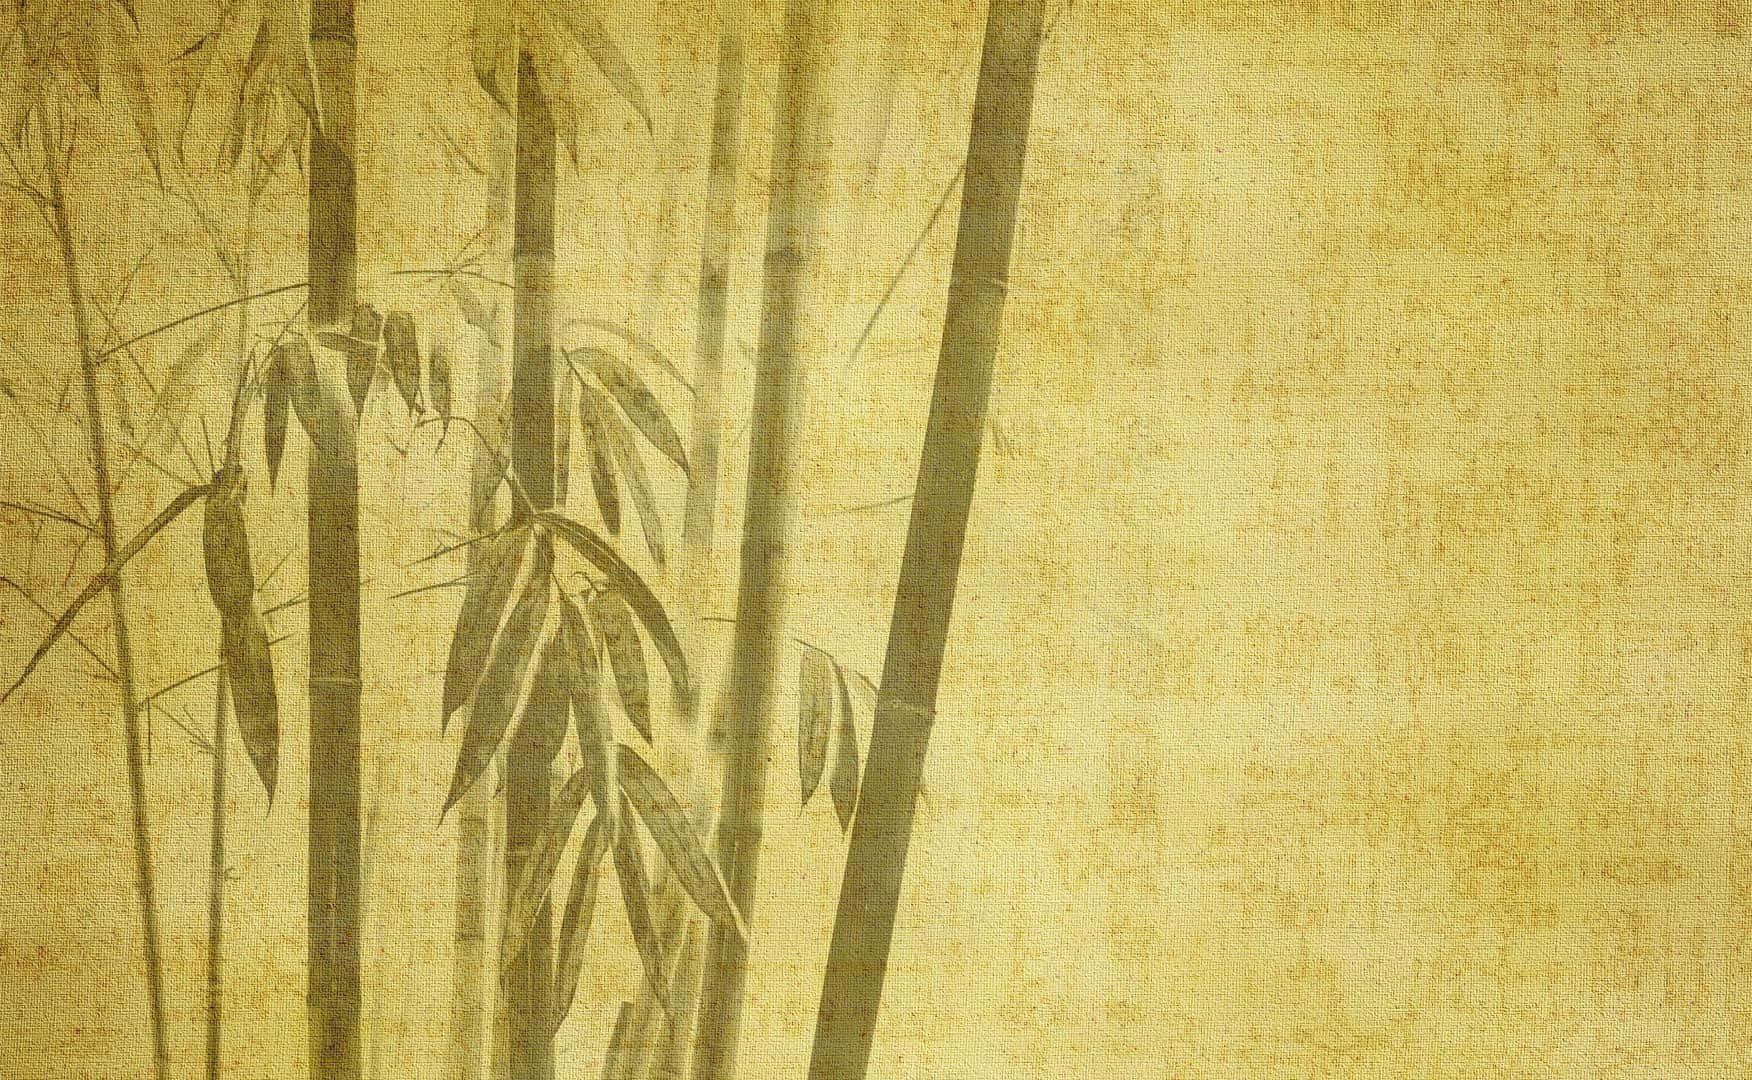 Enljust Grön Bambuskog I Naturen